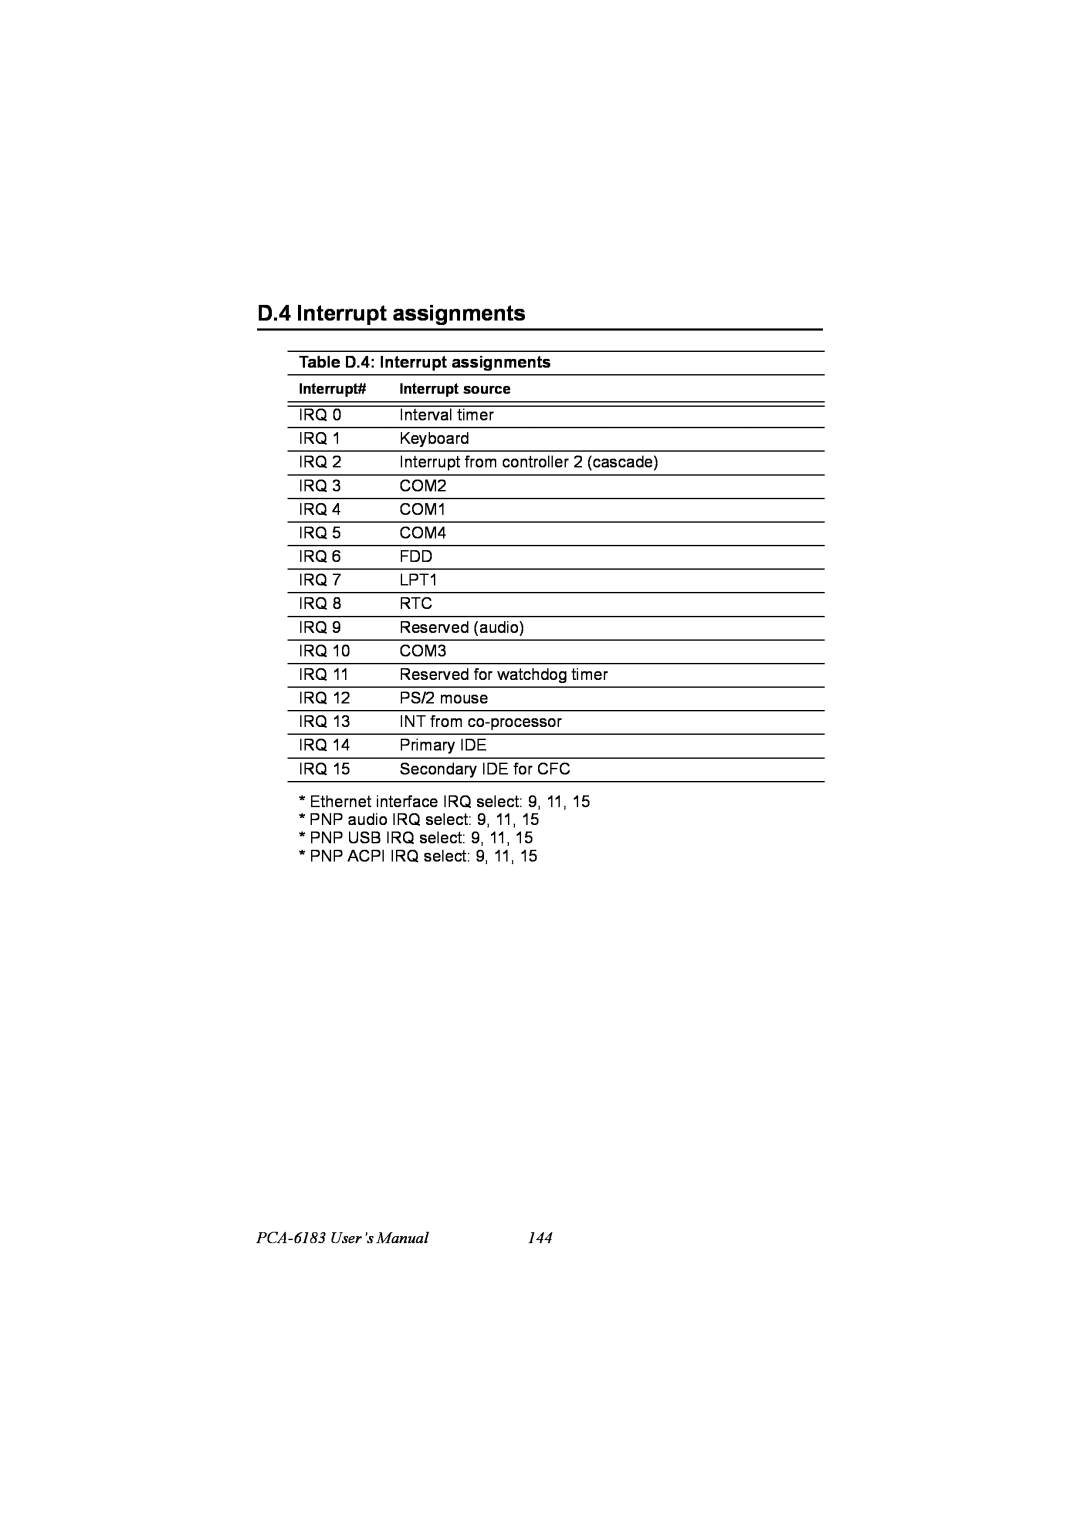 IBM PCM-9575, 100/10 user manual Table D.4 Interrupt assignments, PCA-6183 User’s Manual 